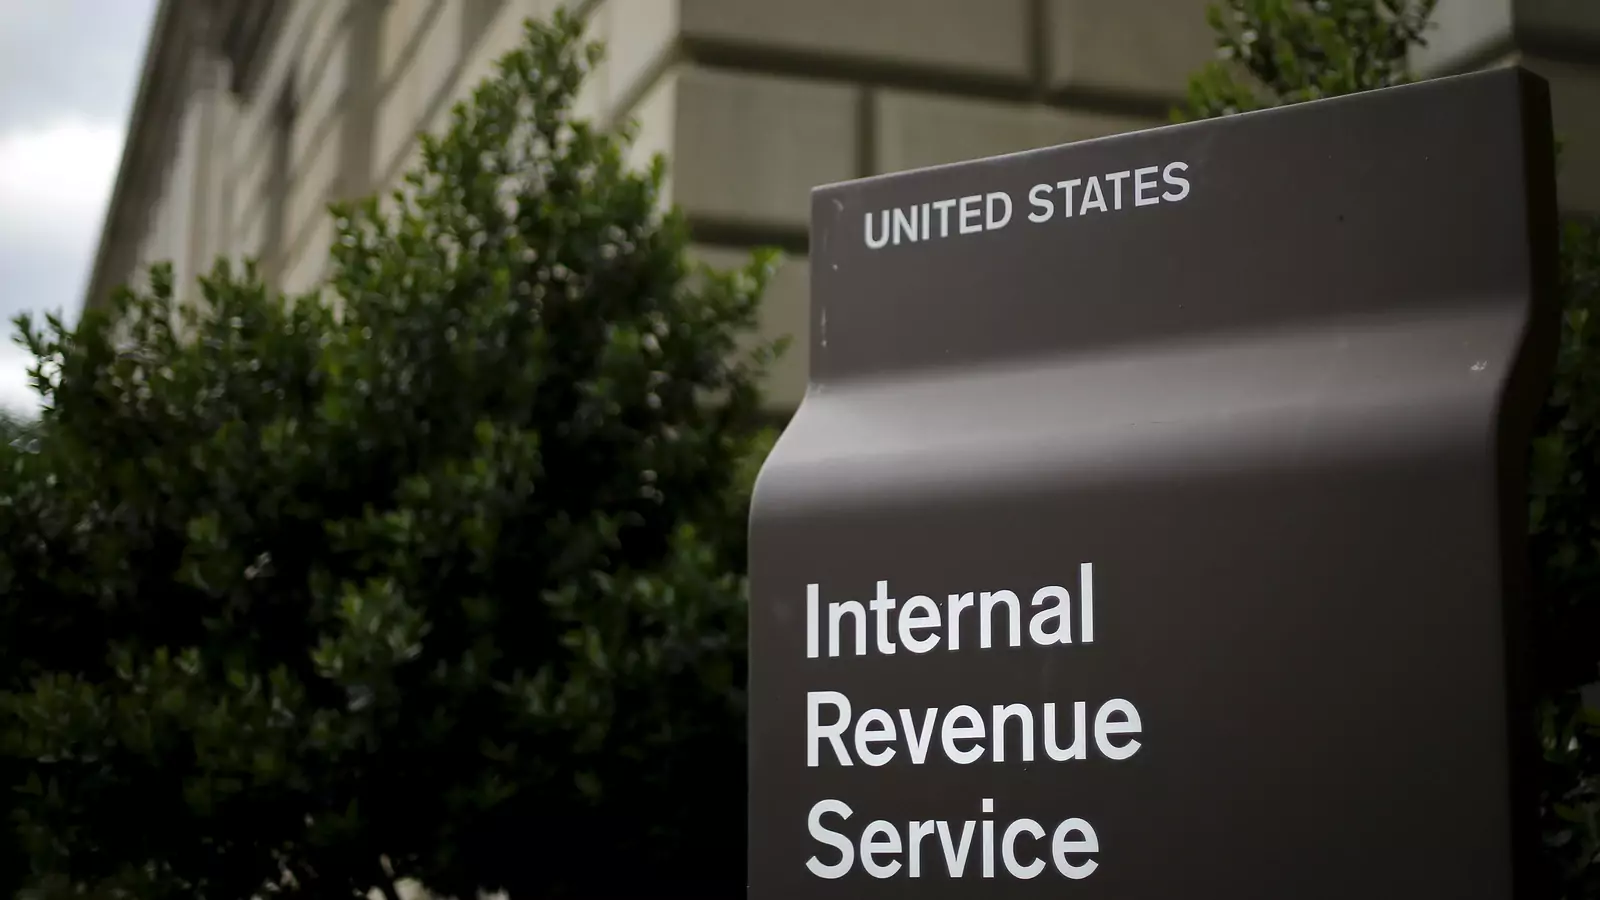 Outside the U.S. Internal Revenue Service (IRS) building in Washington, DC.